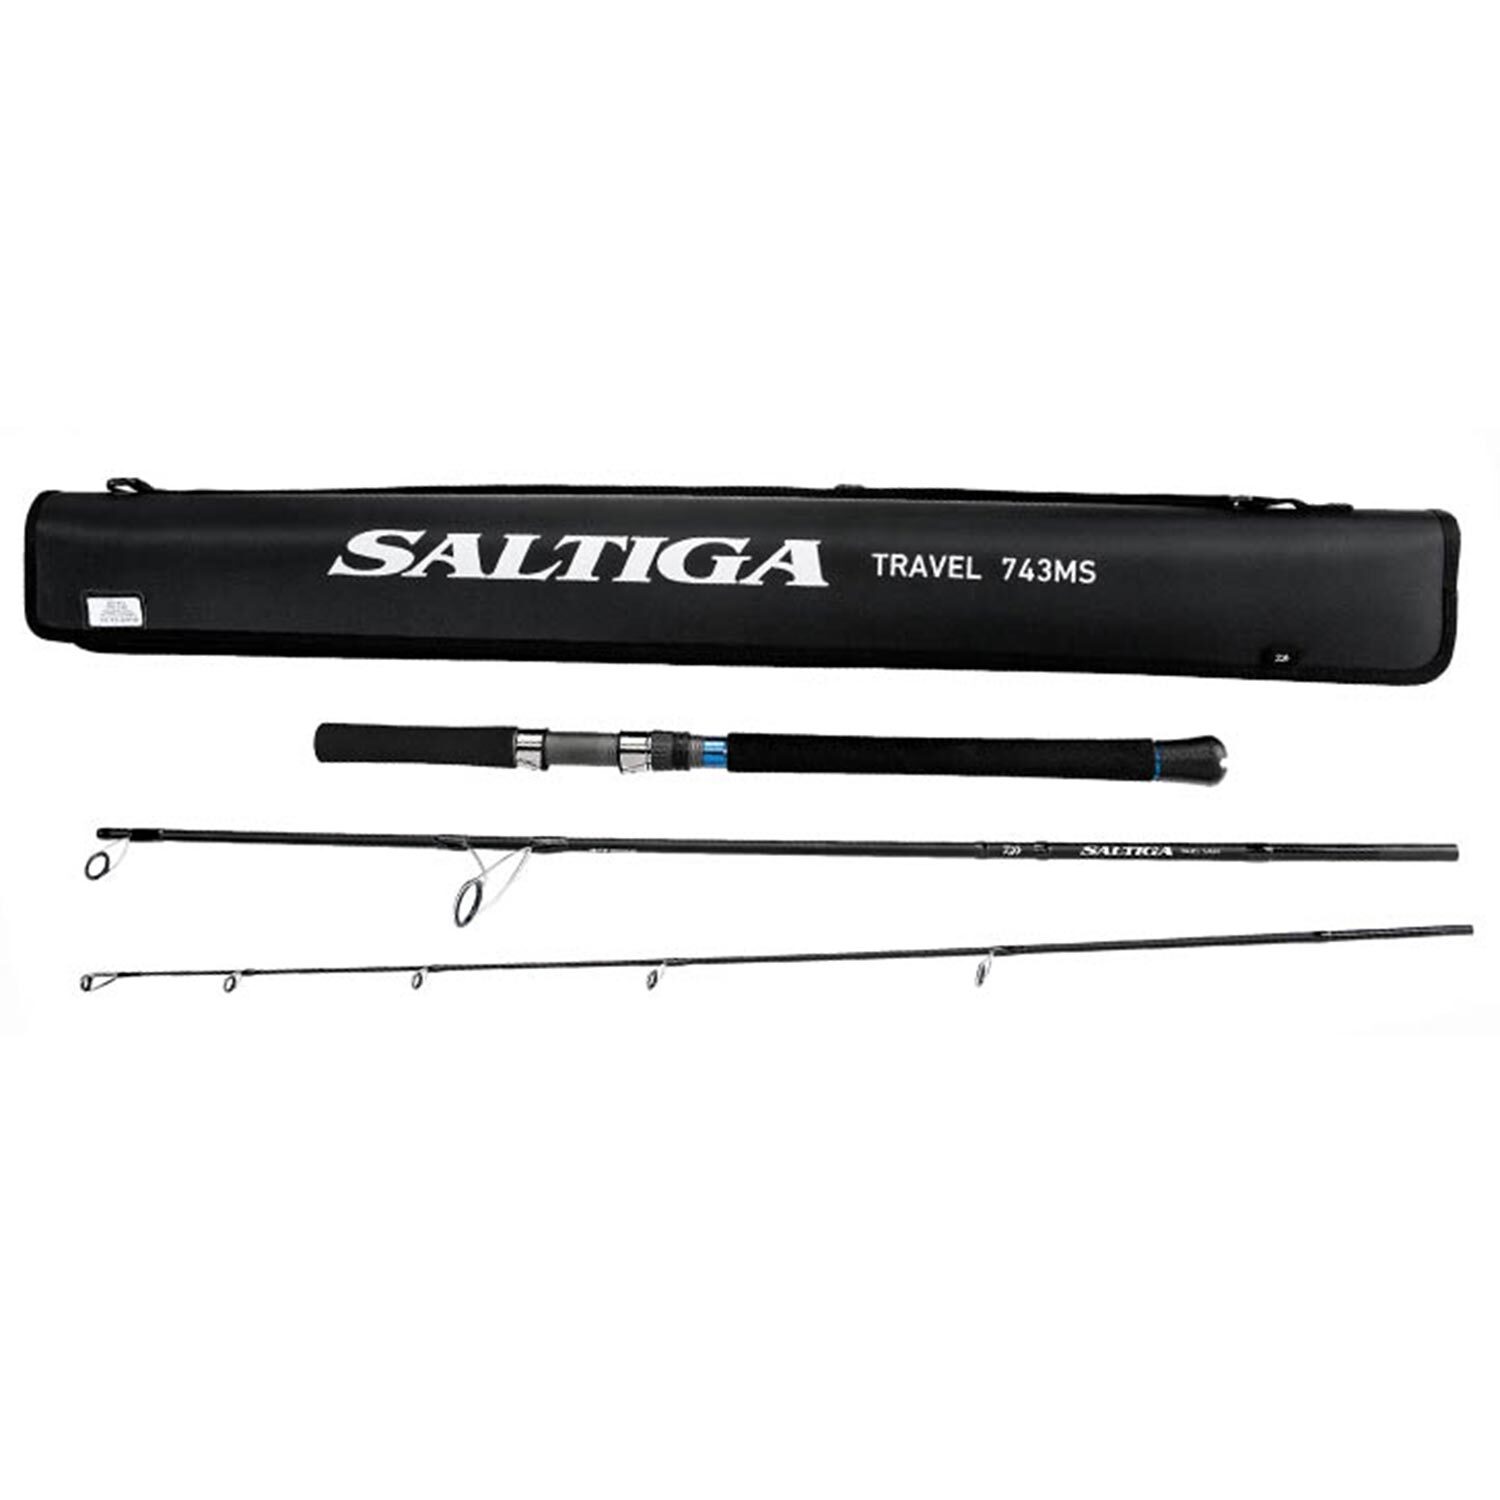 DAIWA 7'4 Saltiga Saltwater Travel Casting Rod